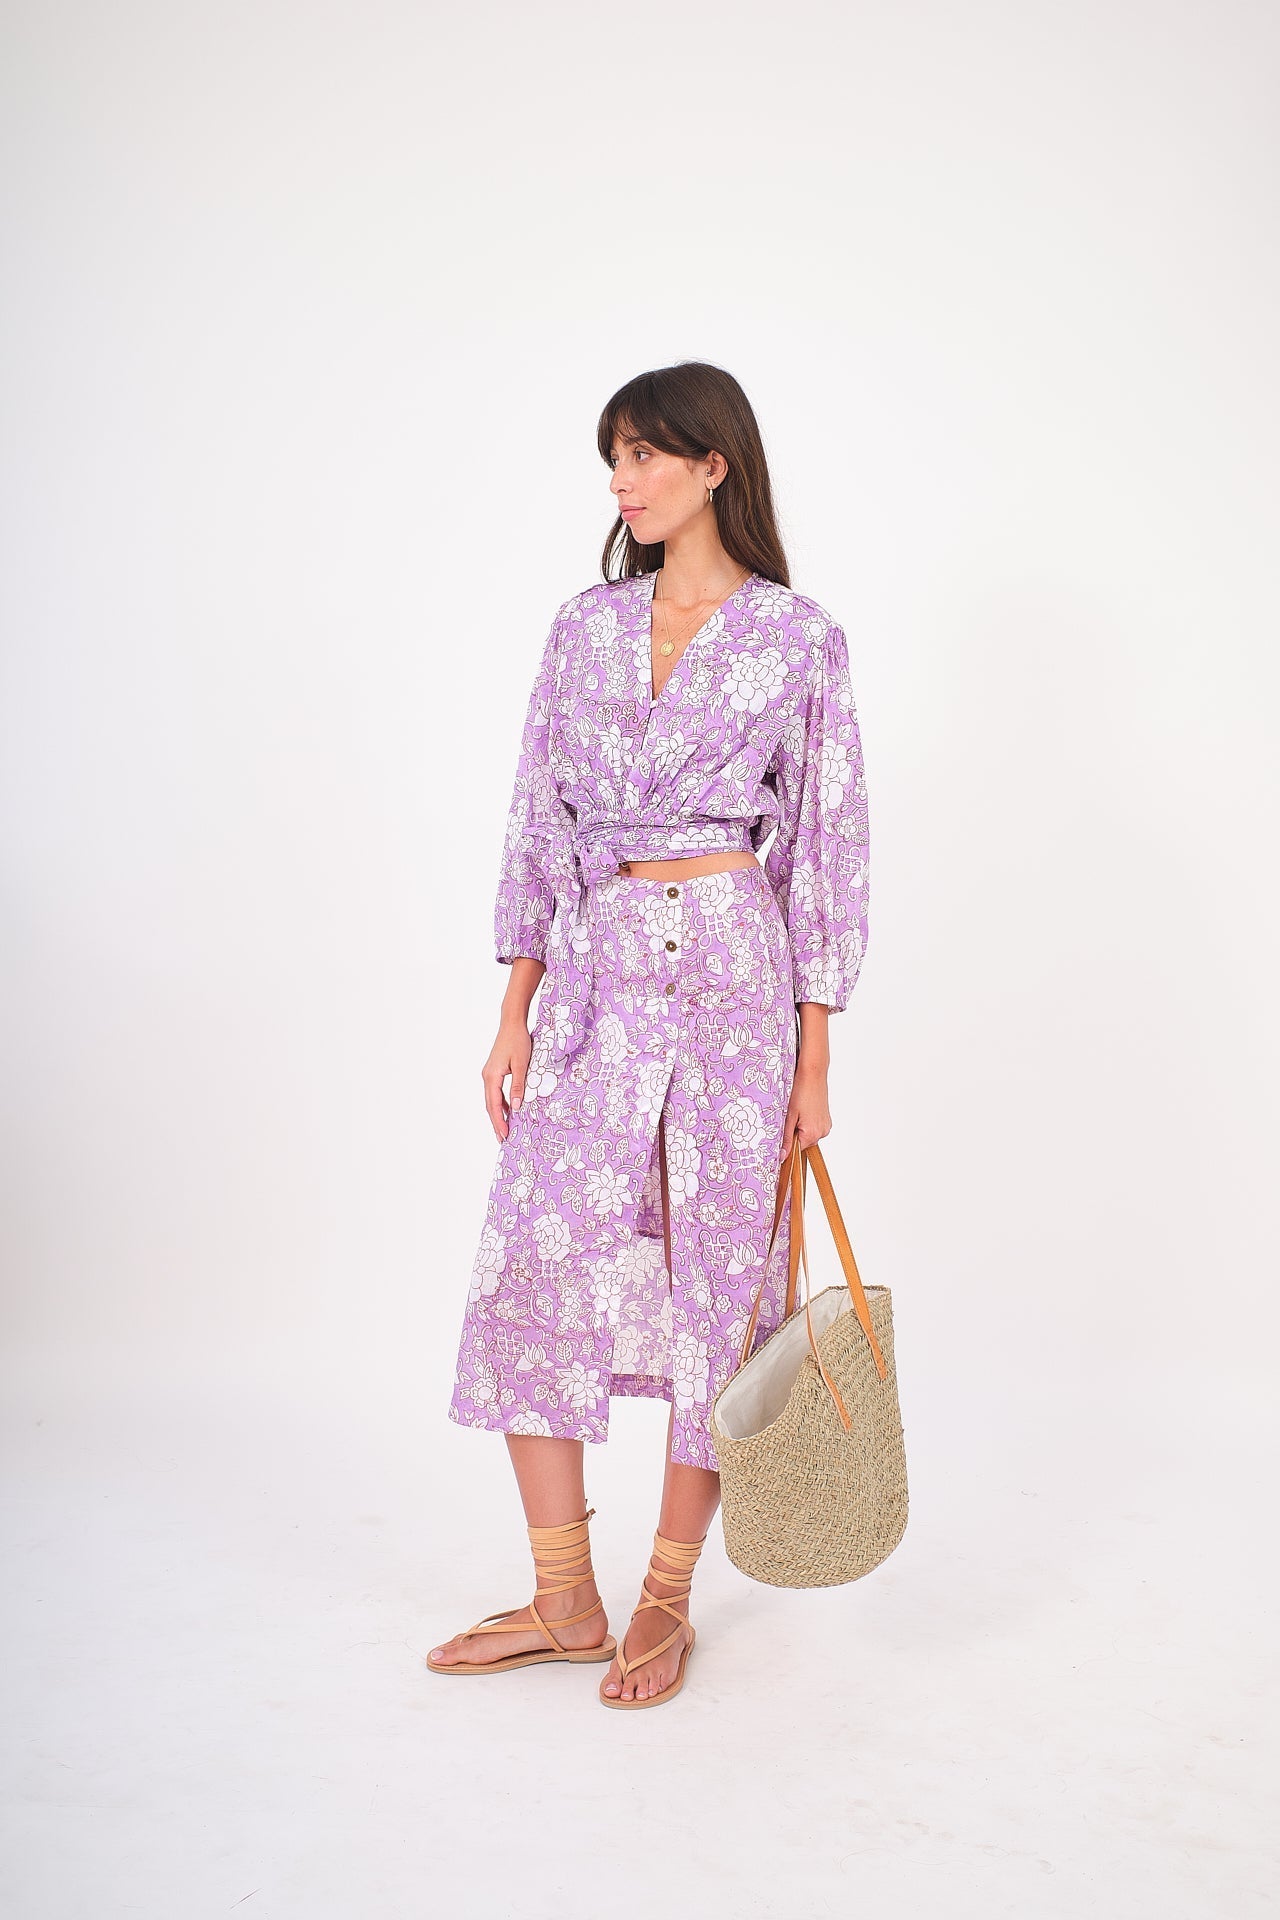 Raya Skirt - Violet Floral by Desert Queen